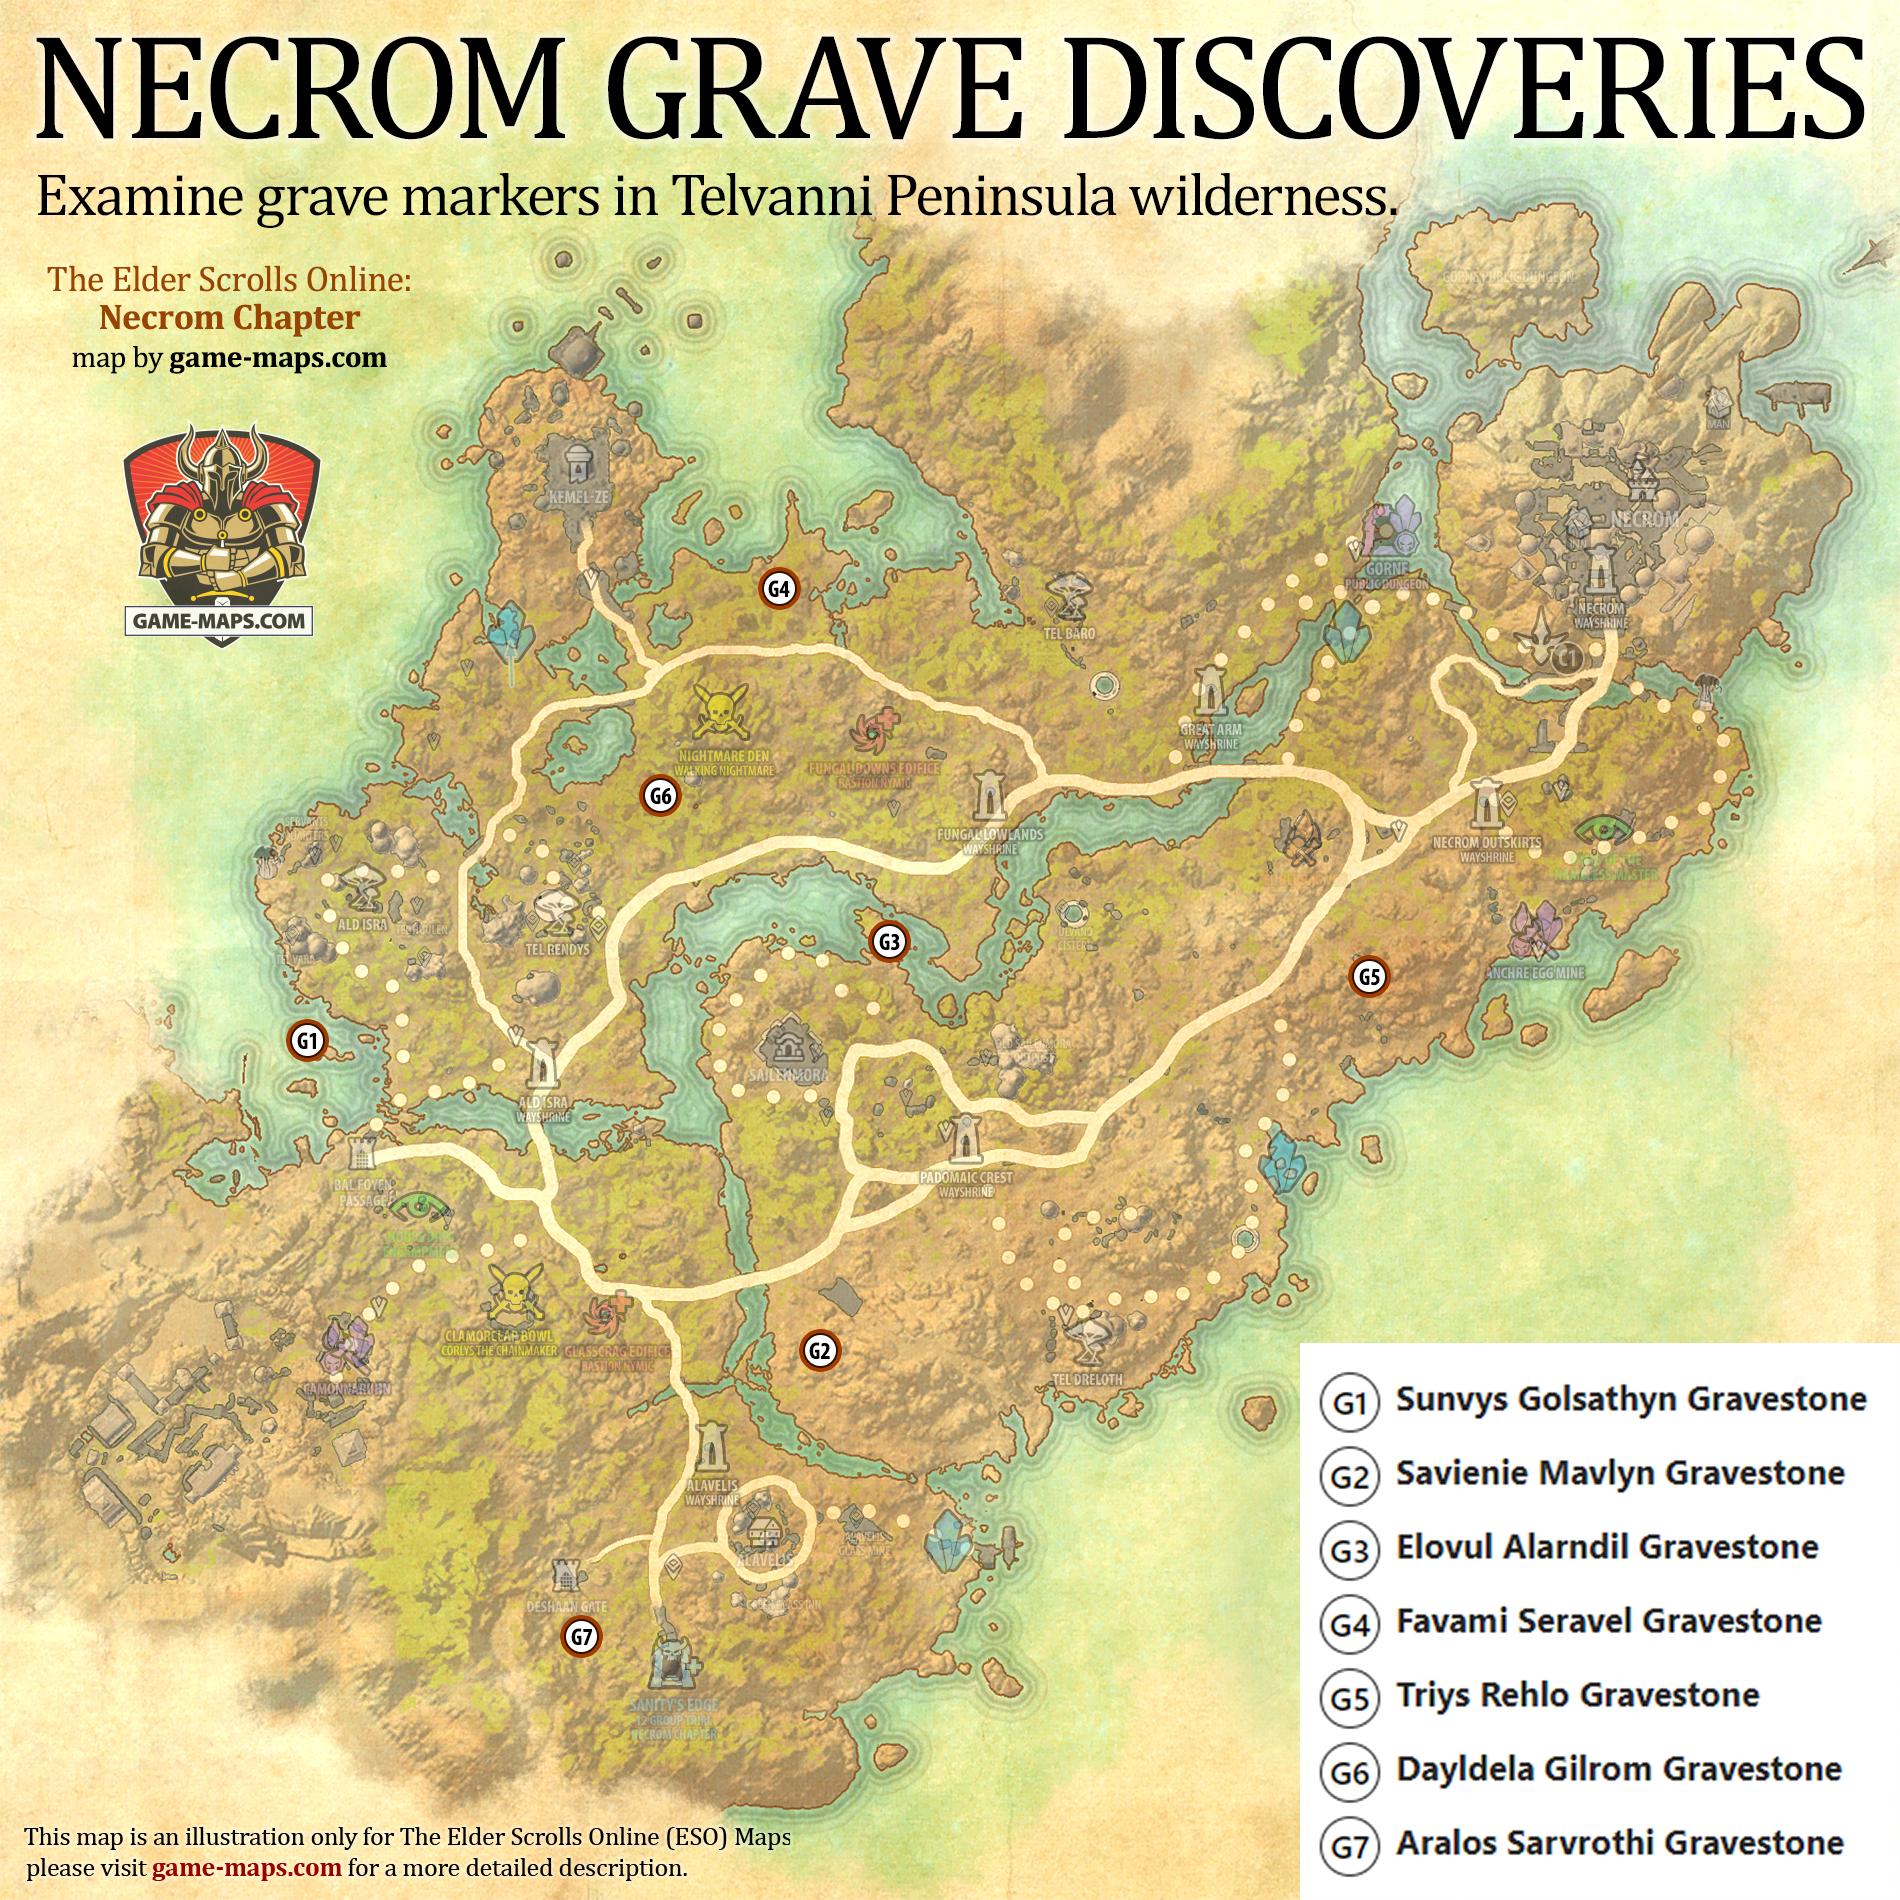 Grave Discoveries in Telvanni Peninsula The Elder Scrolls Online (ESO)